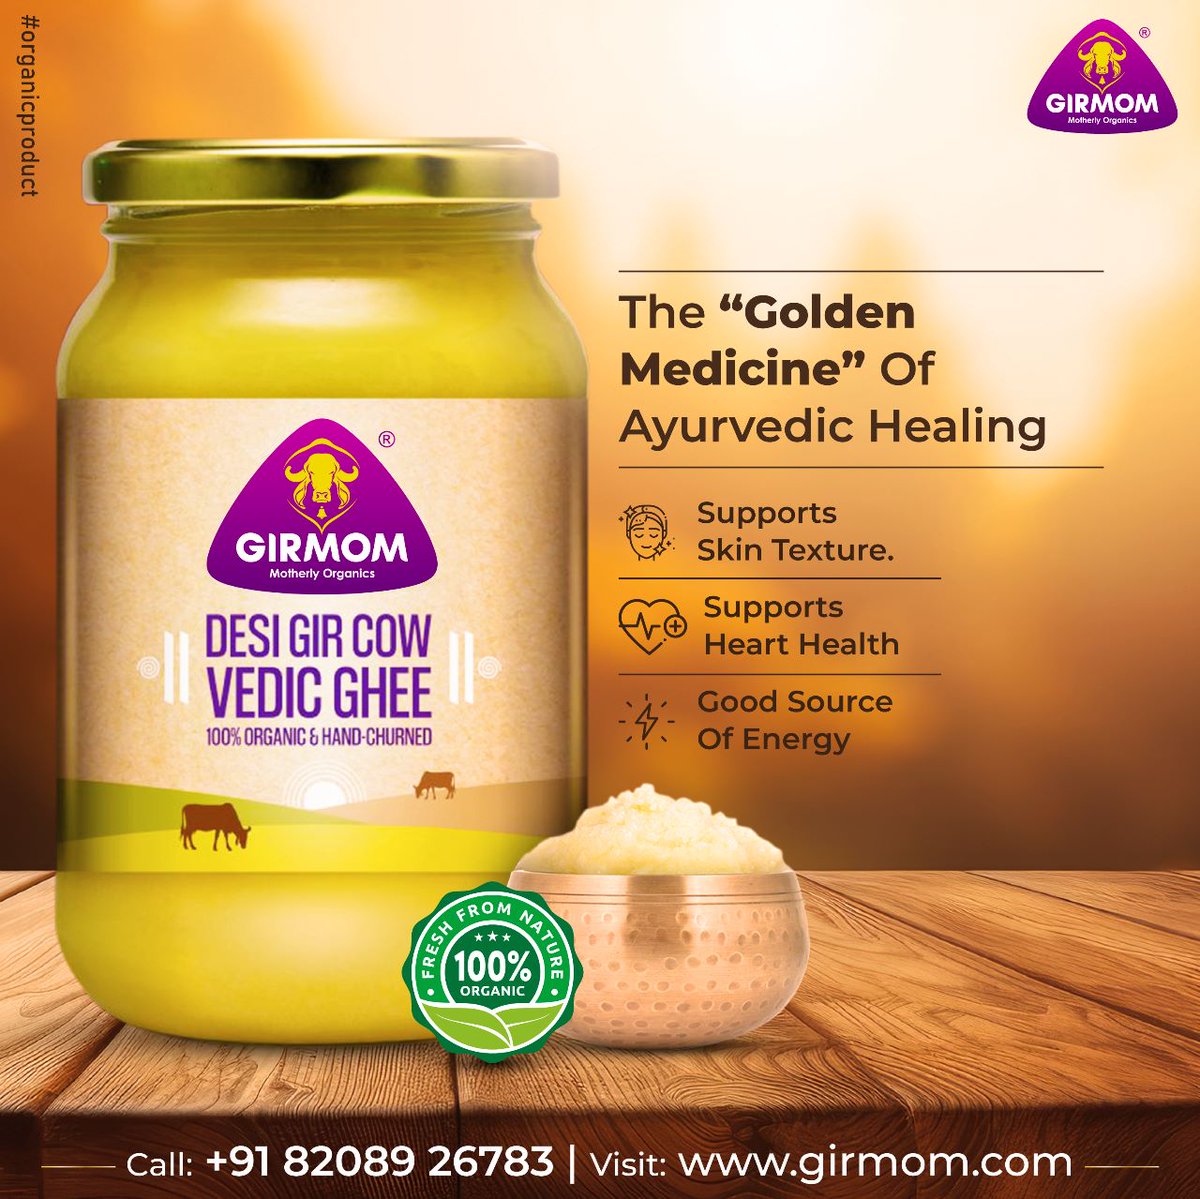 Girmom vedic ghee is the golden medicine of Ayurvedic healing.
Buy Girmom vedic ghee, available on Amazon & Flipkart.
#girmom #girmomvedicghee #vedicghee #ghee #desighee #bilonaghee #cowghee #gircowghee #girmomghee #organicghee #organic